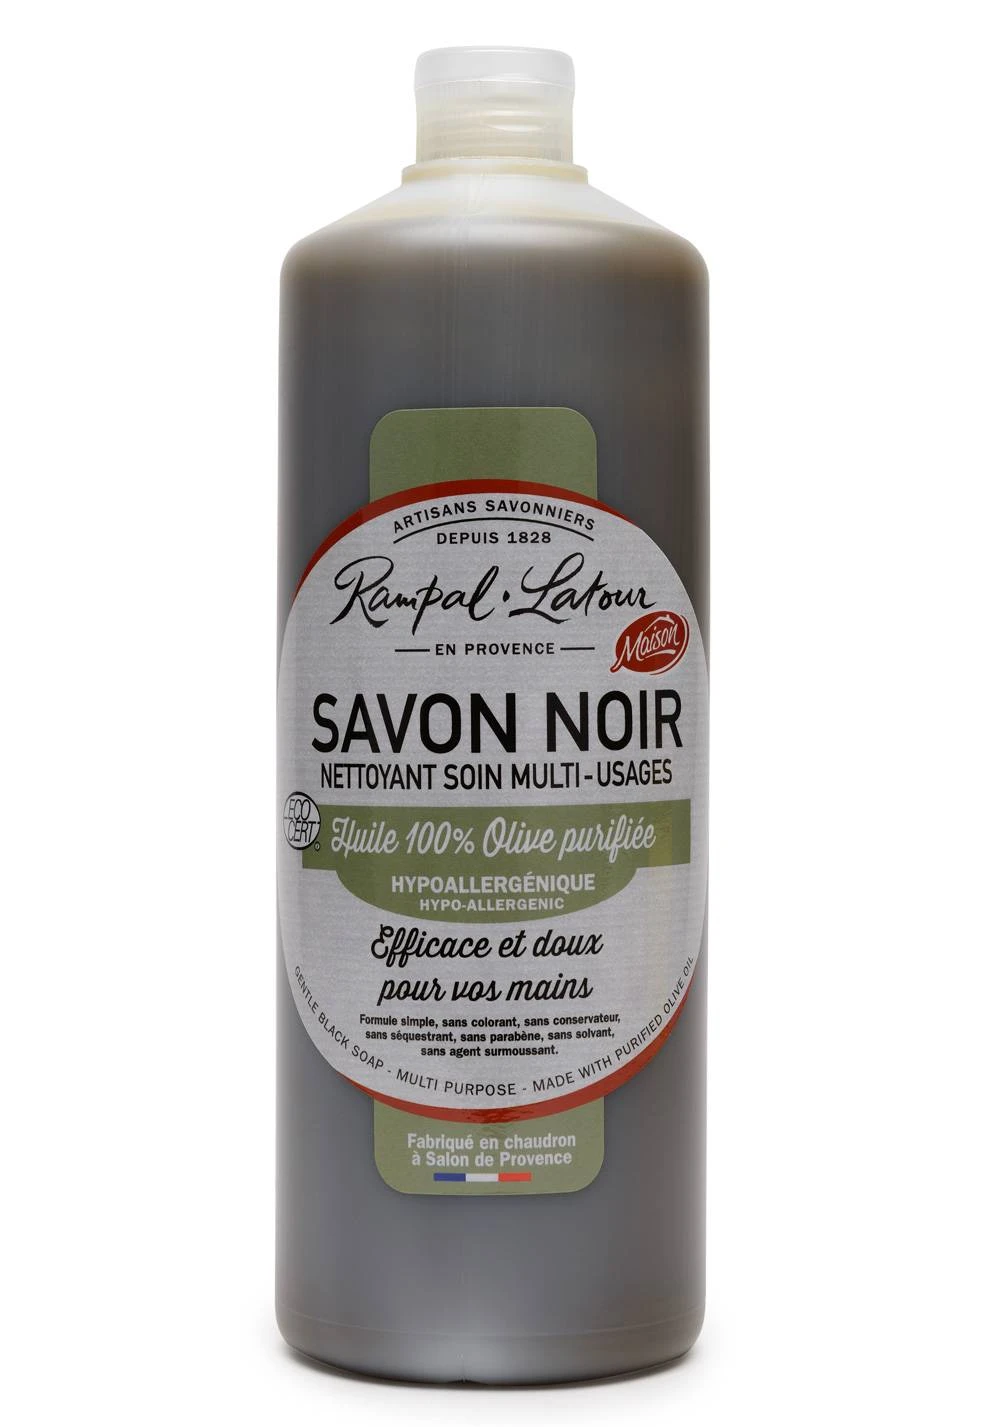 Savon noir - sapun negru hipoalergenic - concentrat natural pentru toate suprafetele, 1000ml - rampal latour